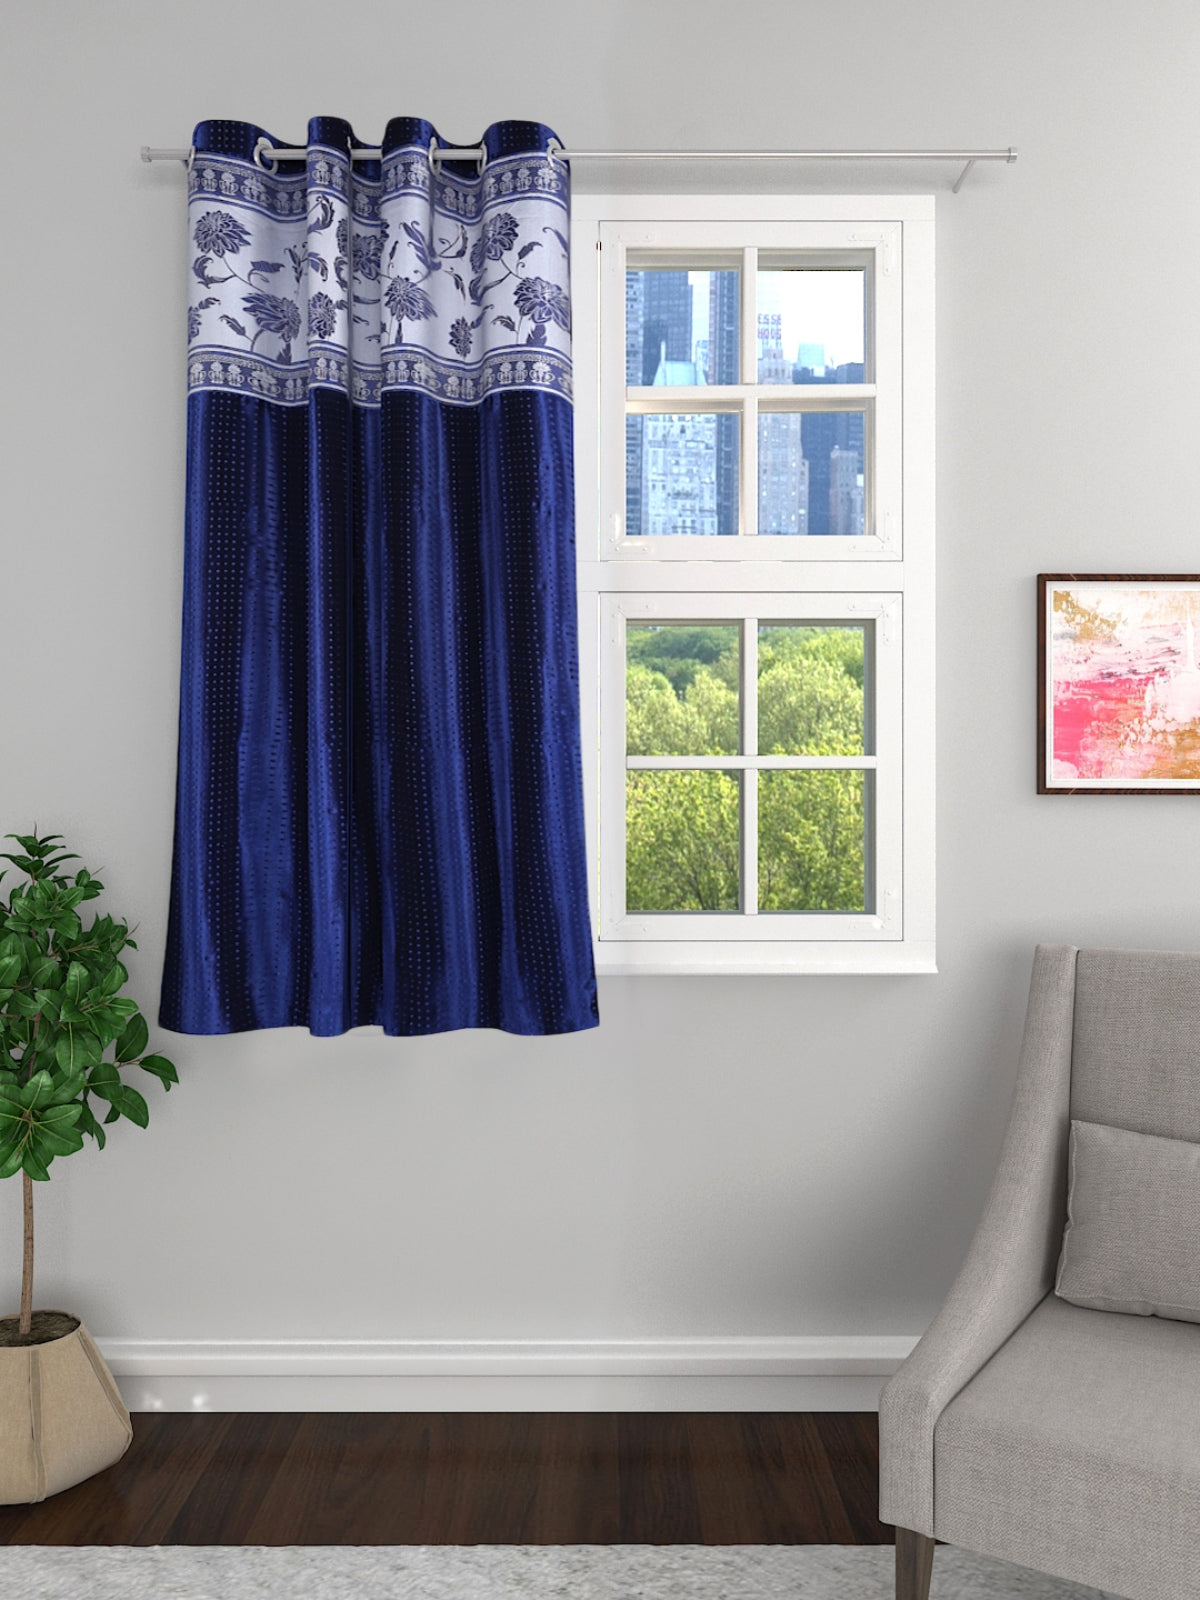 Romee Royal Blue Jacquard Set of 1 Curtain Door Curtains